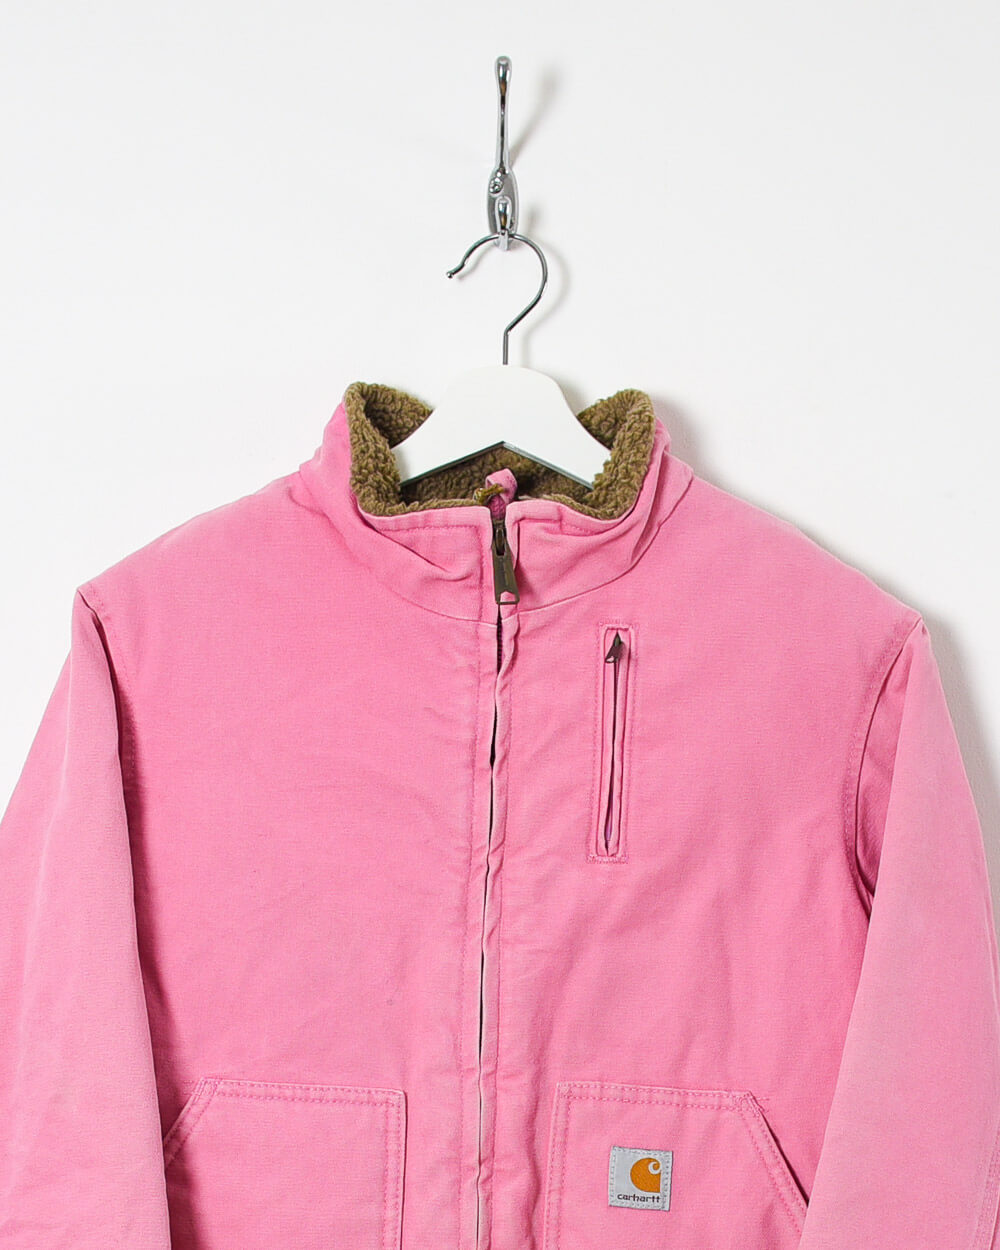 Carhartt Women's Fleece Lined Jacket - Medium - Domno Vintage 90s, 80s, 00s Retro and Vintage Clothing 